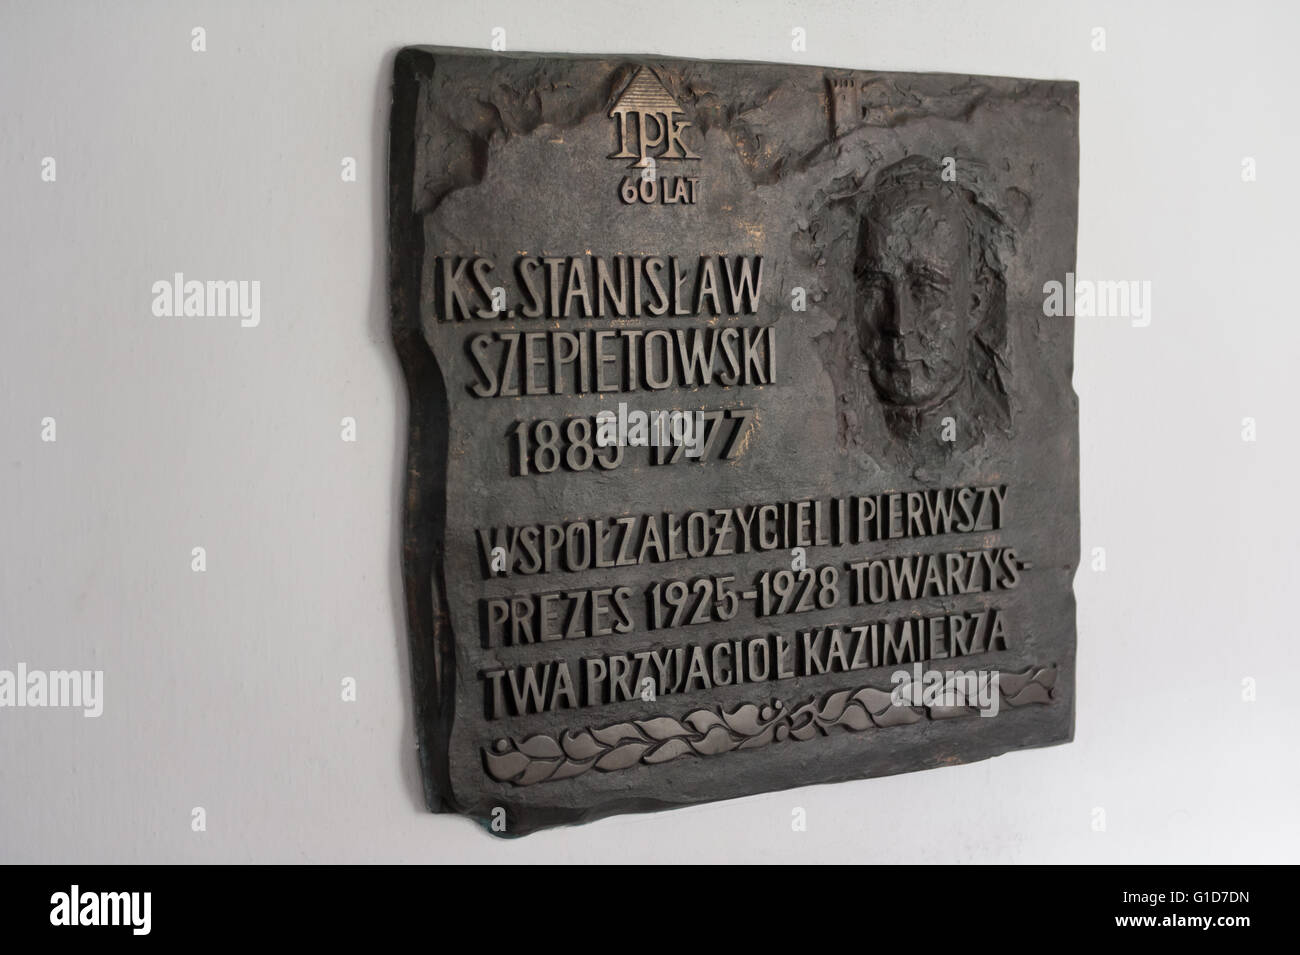 Stanislaw Szepietowski commemorative plaque in the monastic cloister of quadrangle, patio surrounding a pleasure garden, Poland. Stock Photo